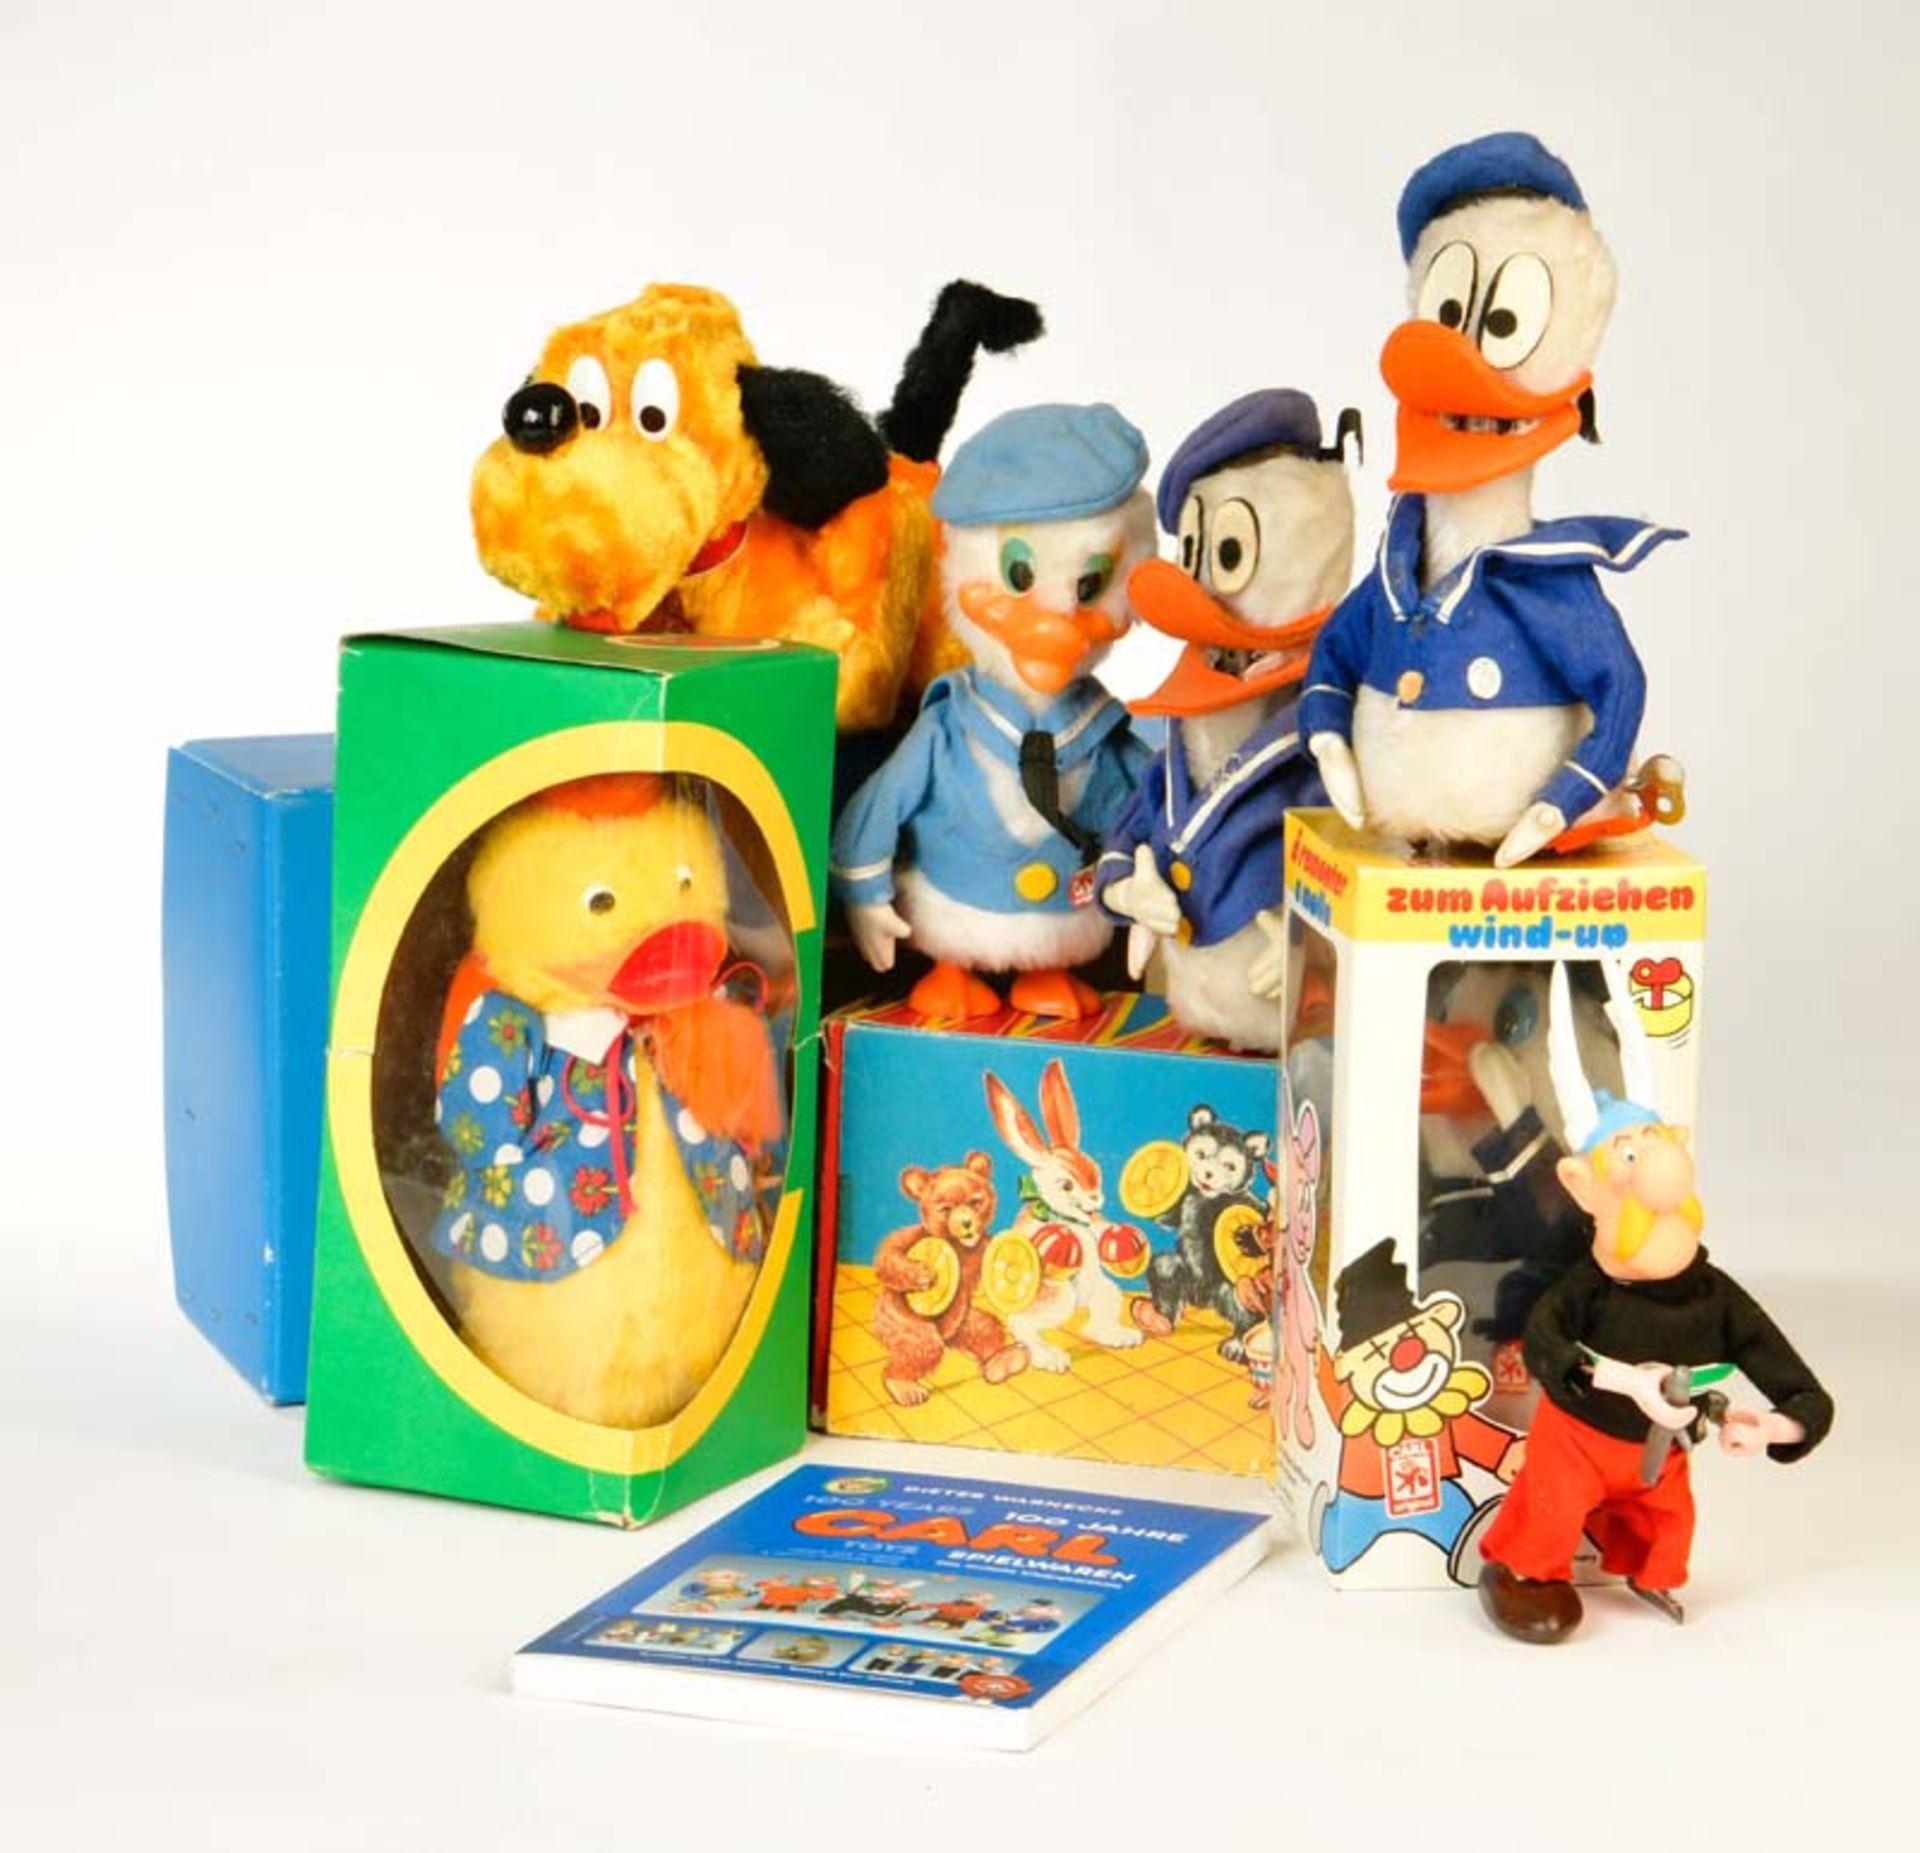 Carl, 4x Donald Duck, Pluto, Ente, Asterix + 1 Buch